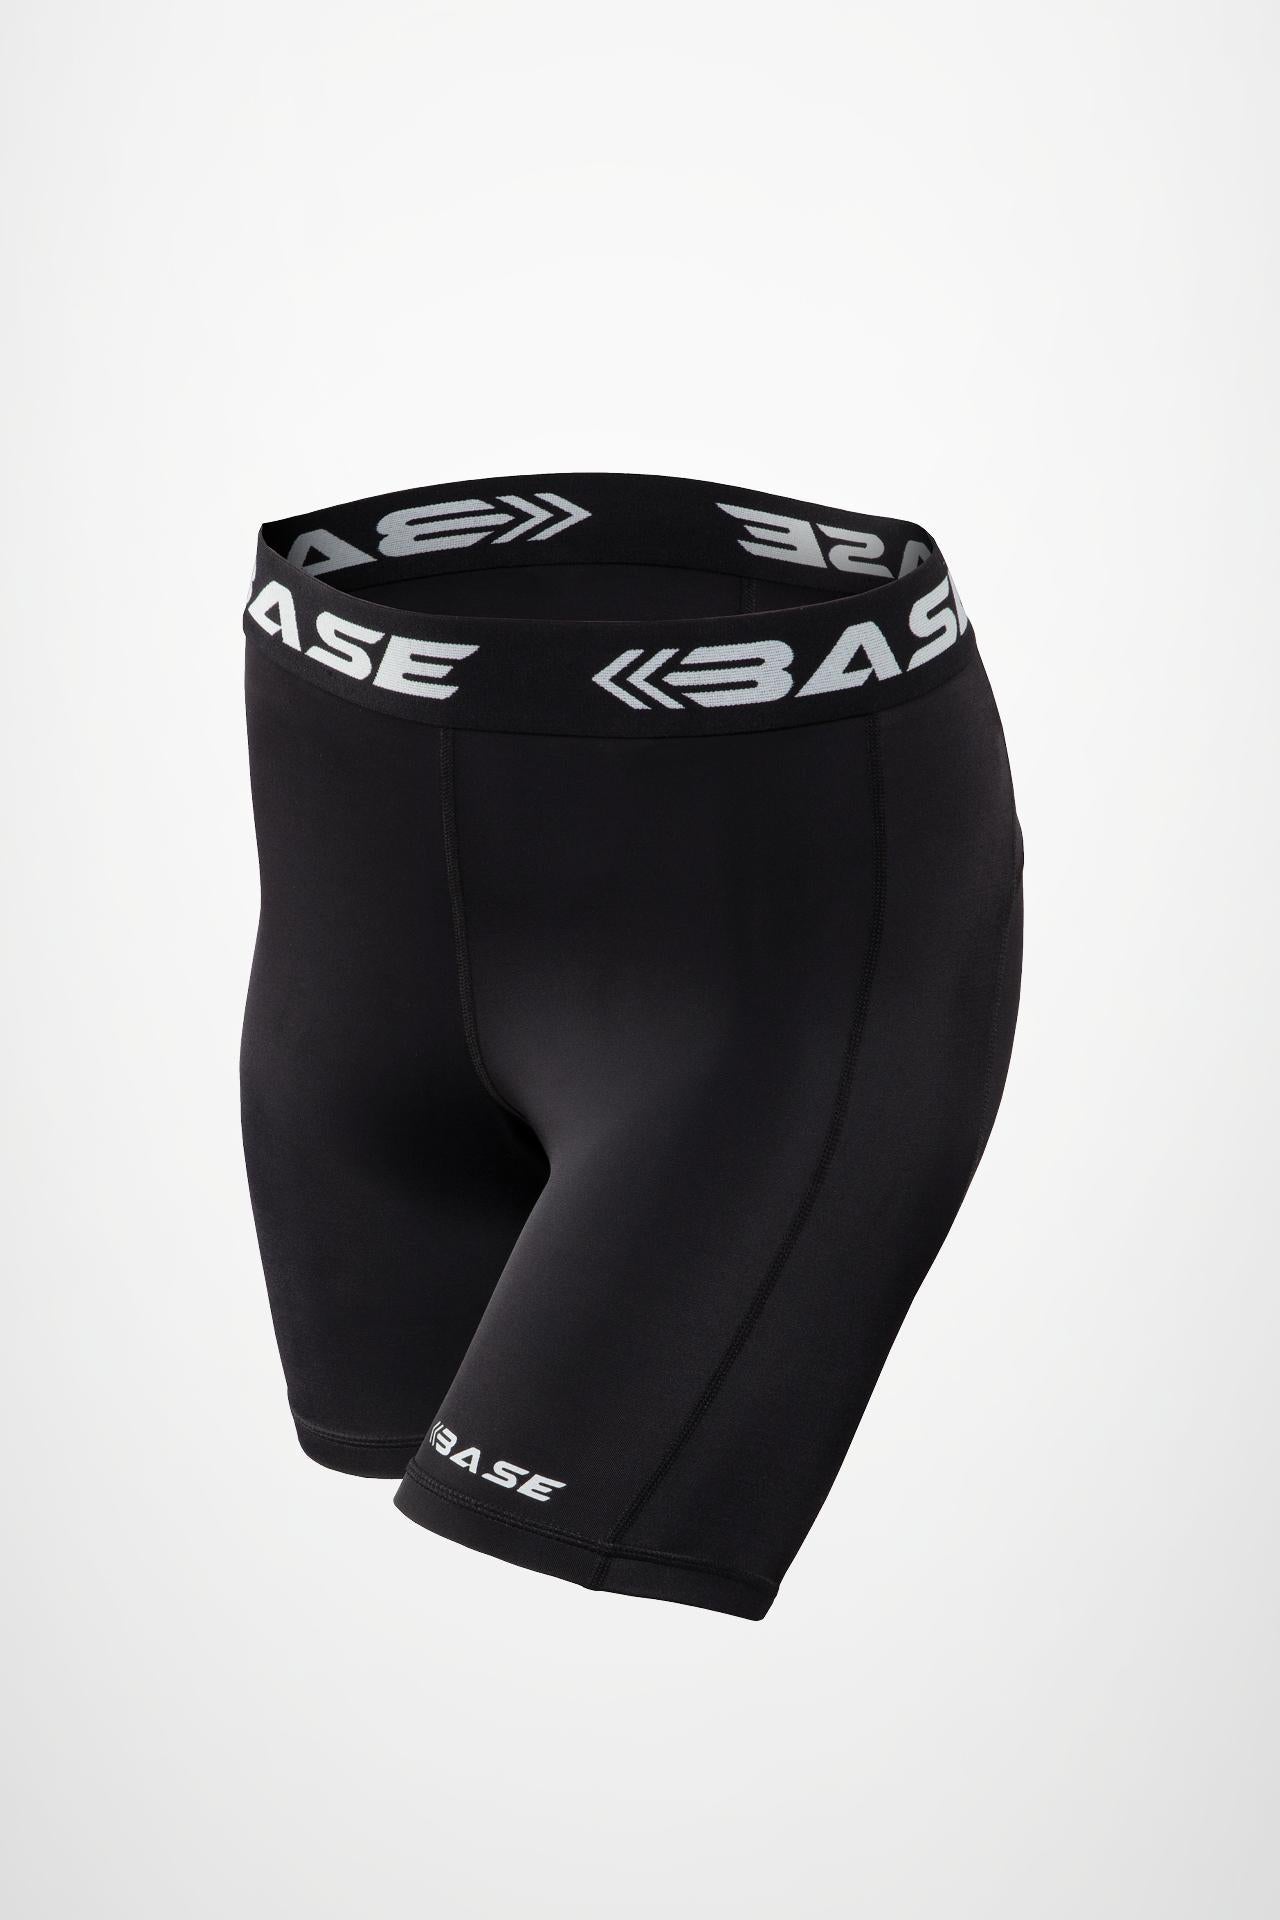 BASE Women's Compression Shorts - Black - Adelaide 36ers